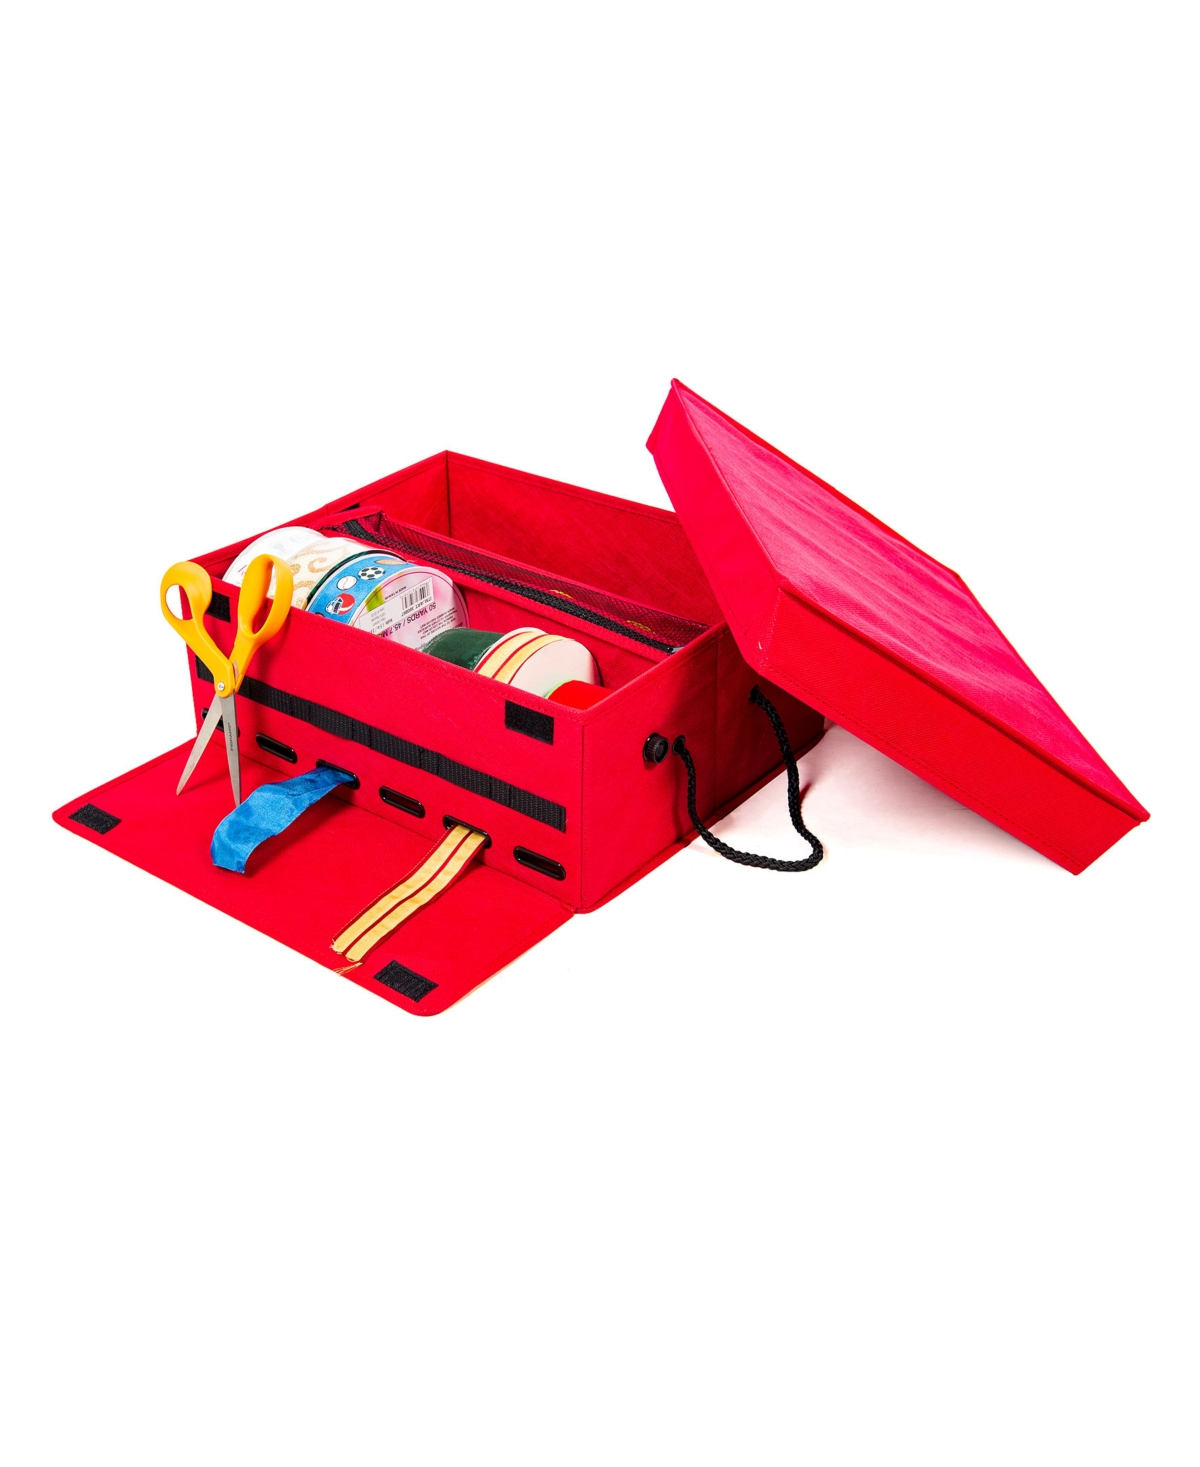 Ribbon Storage Box and Dispenser - Red